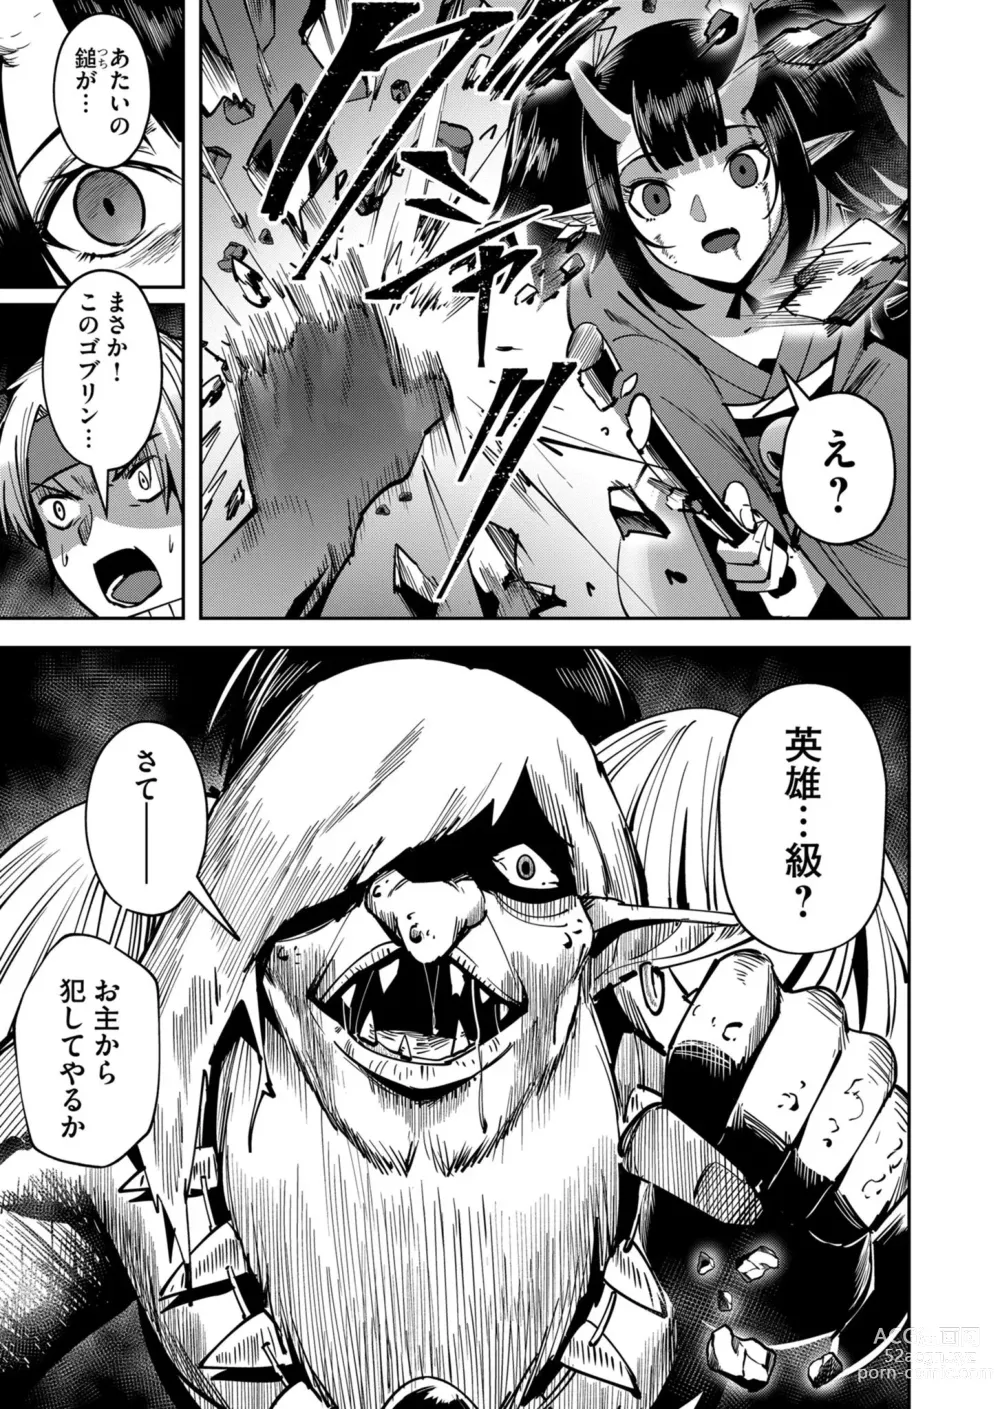 Page 159 of manga Kichiku Eiyuu Vol.03